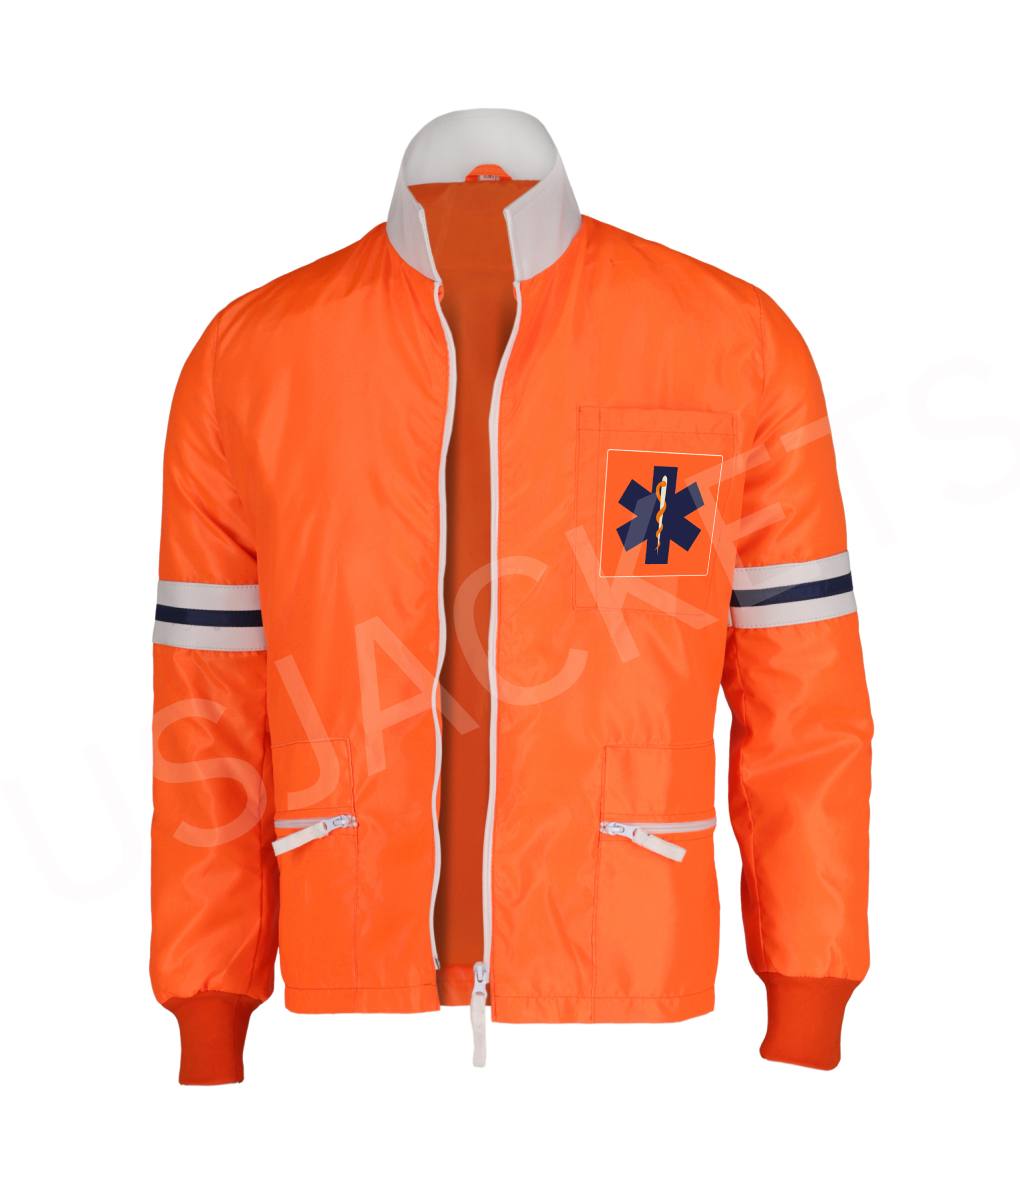 J. J. McClure Orange Jacket1